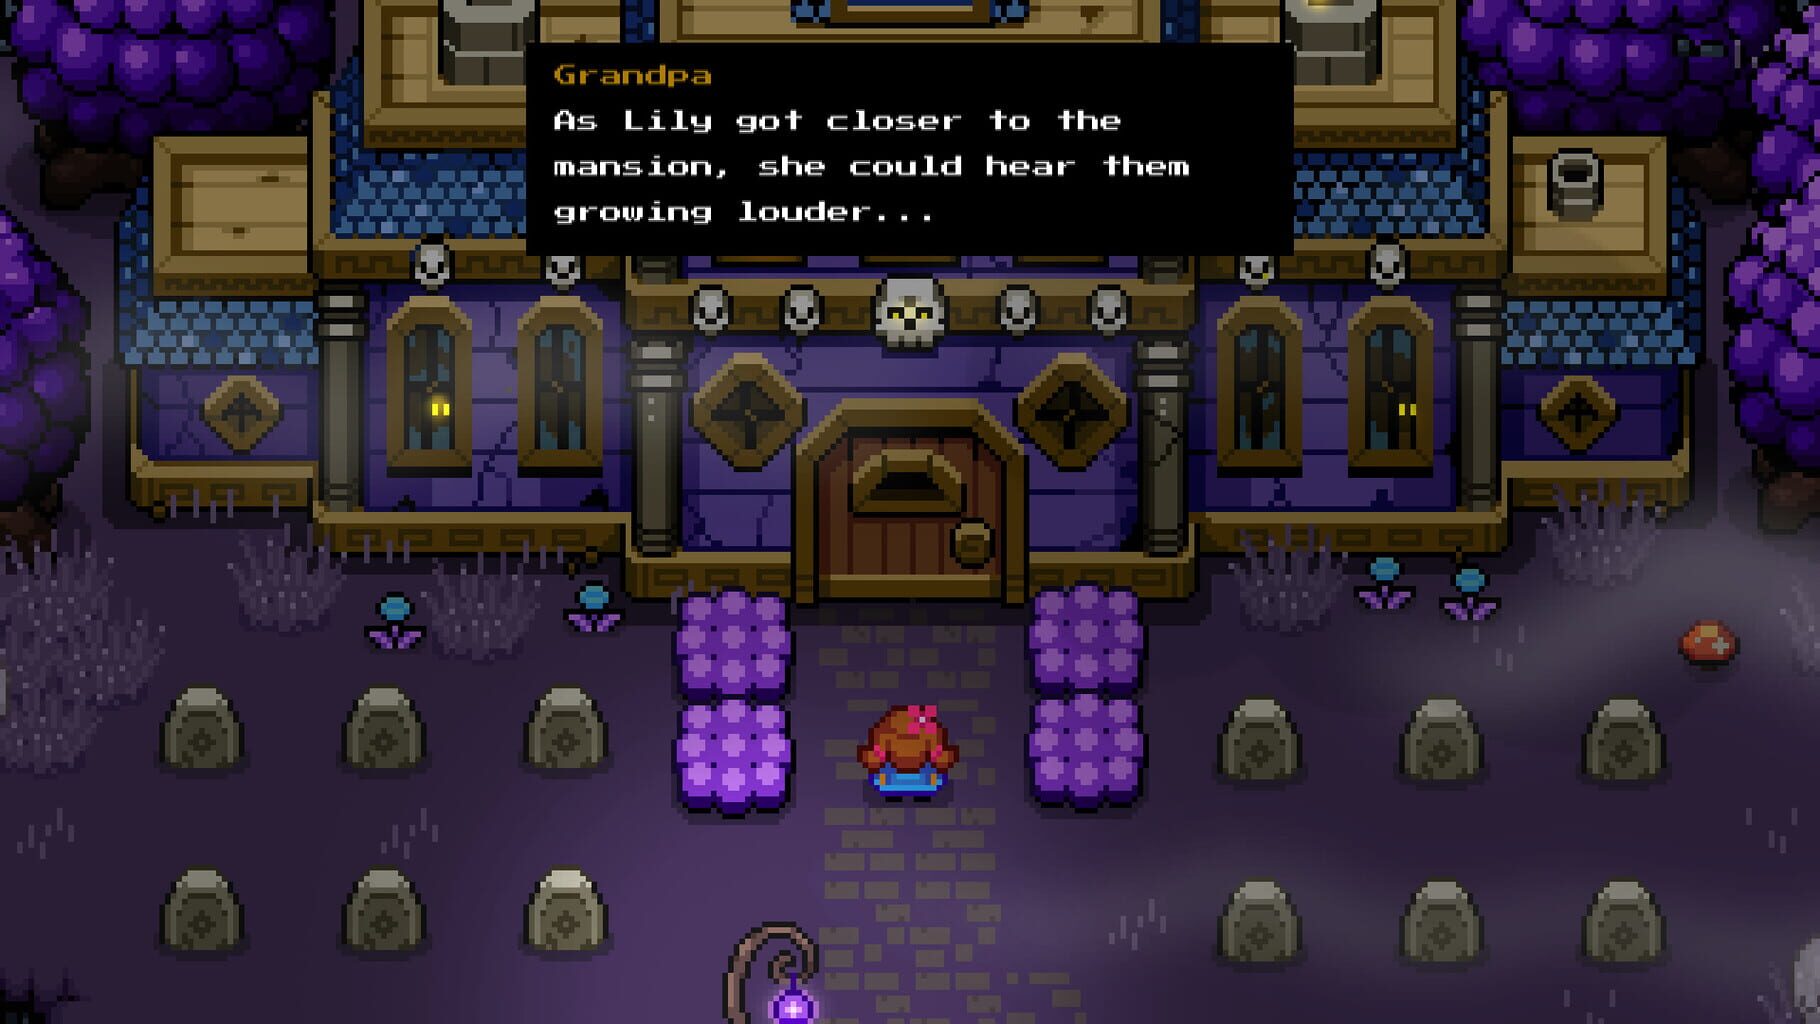 Captura de pantalla - Blossom Tales 2: The Minotaur Prince